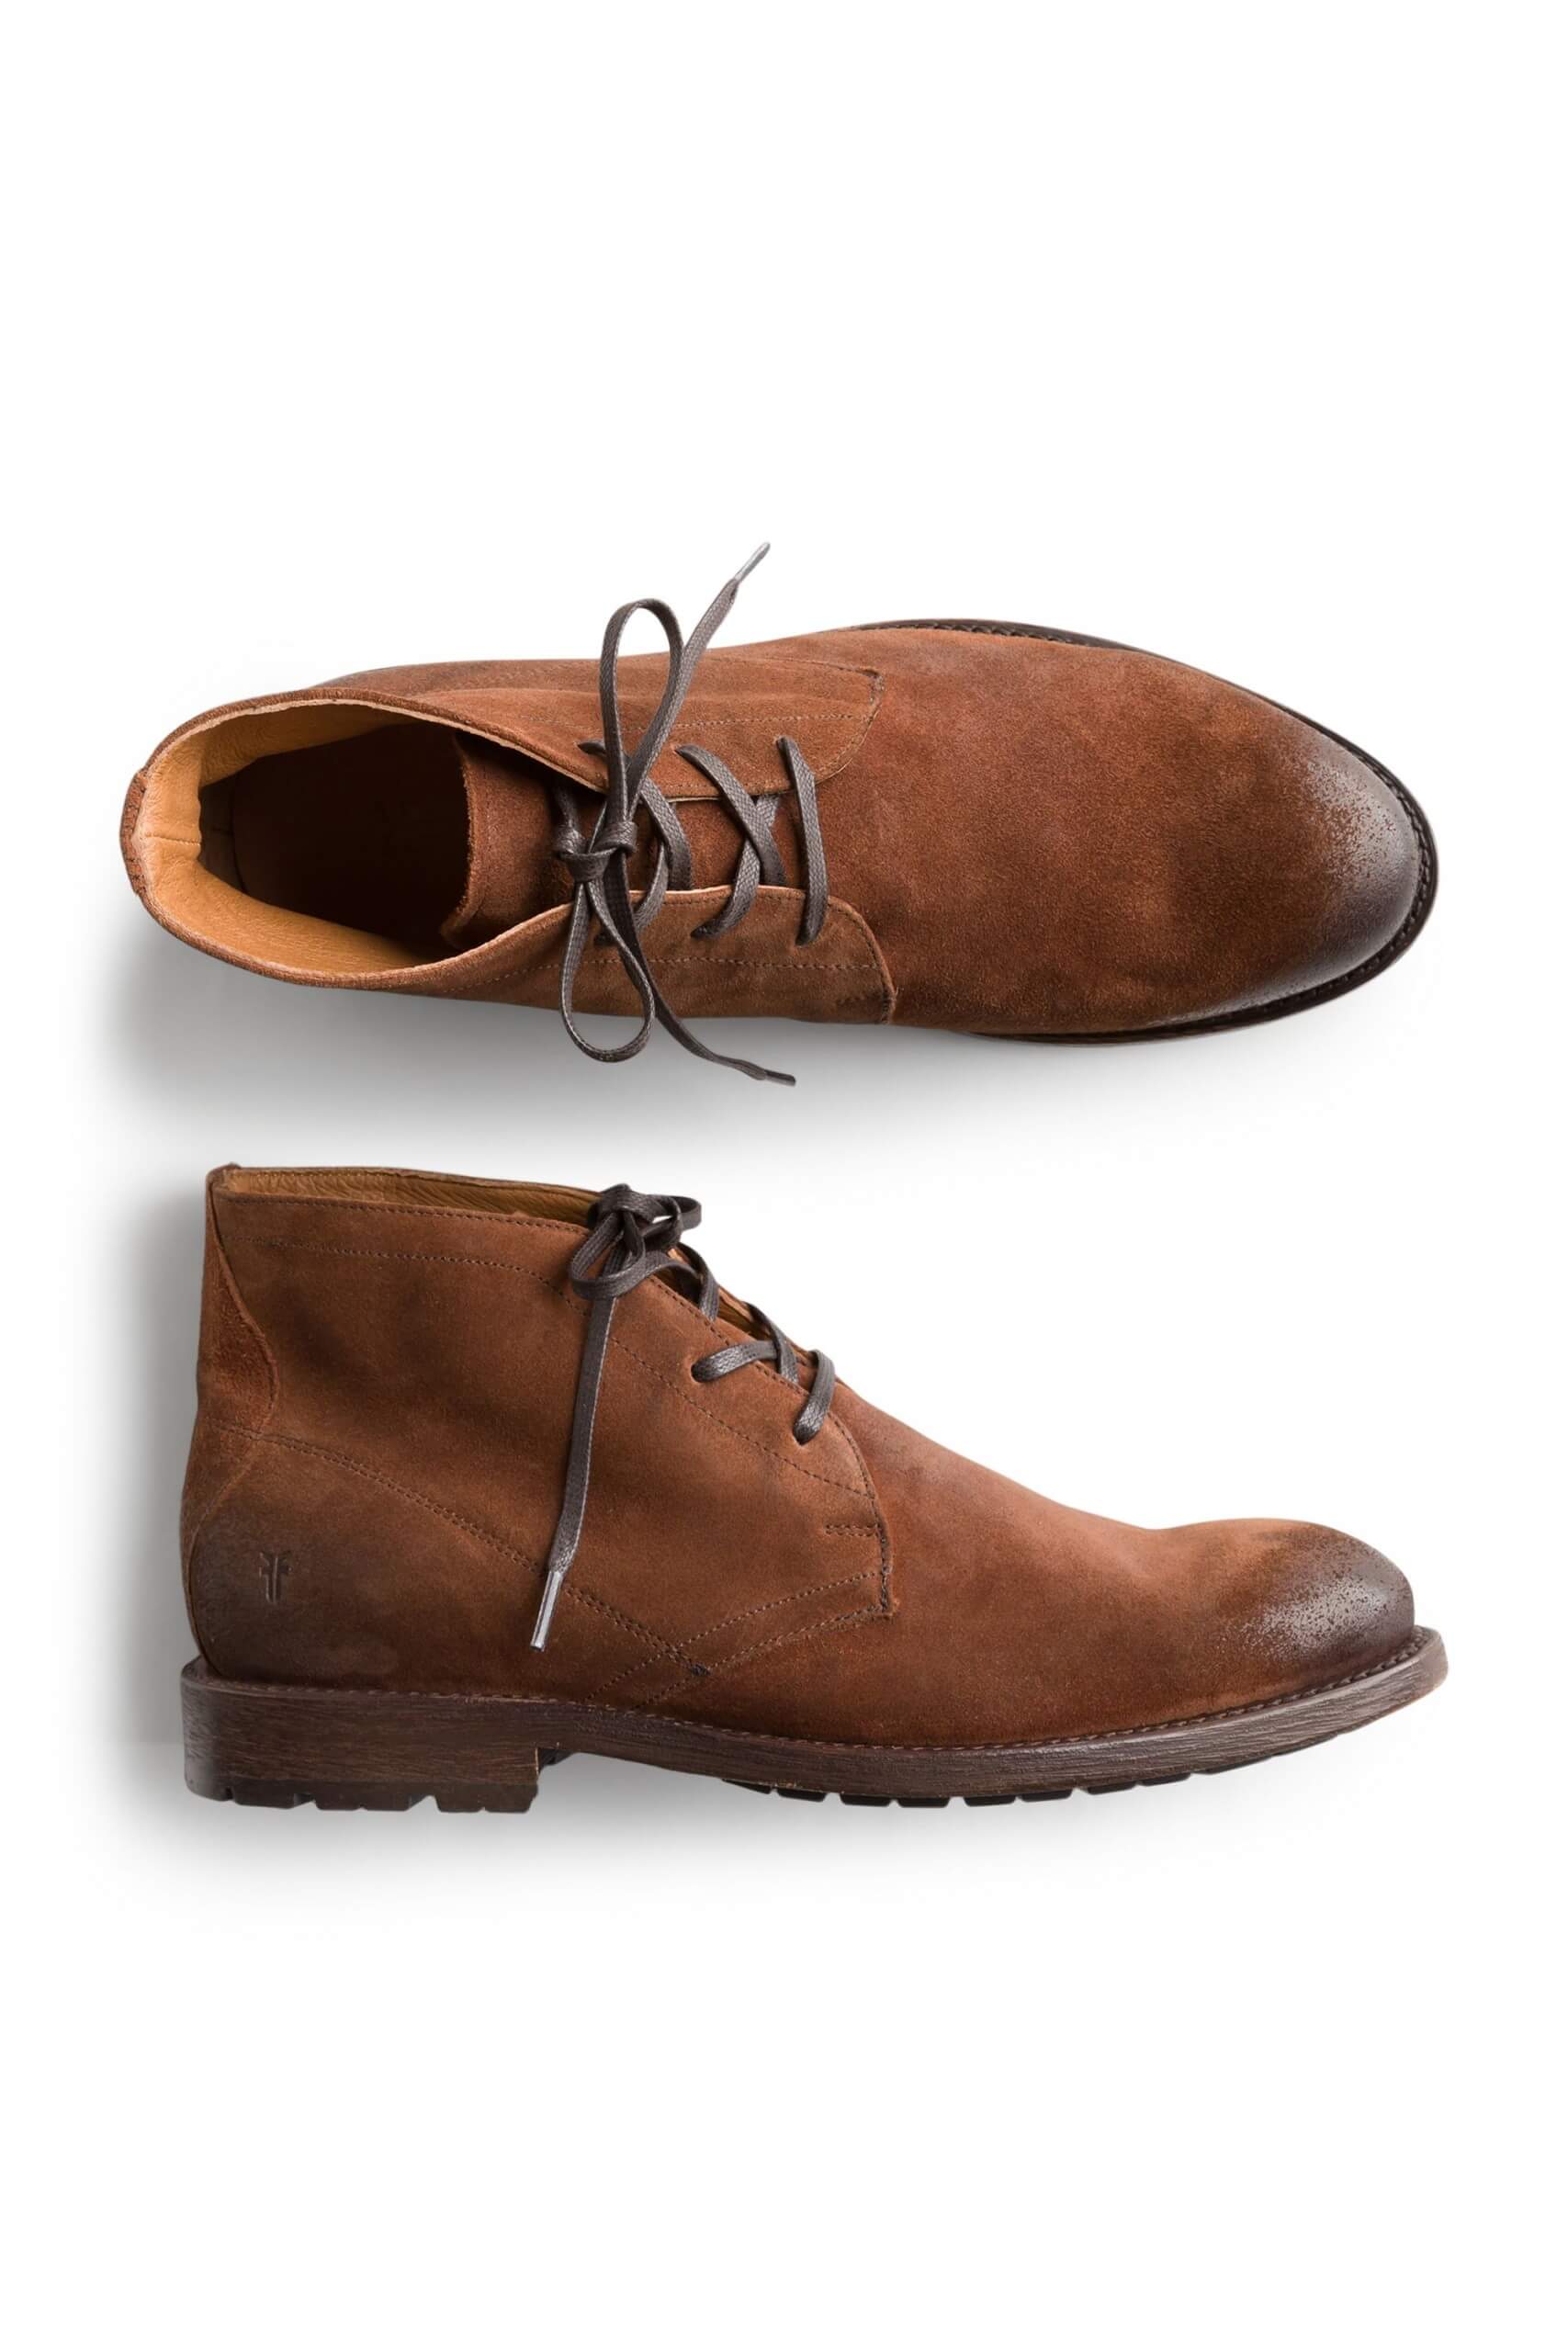 Stitch Fix men’s brown leather Chukka boots